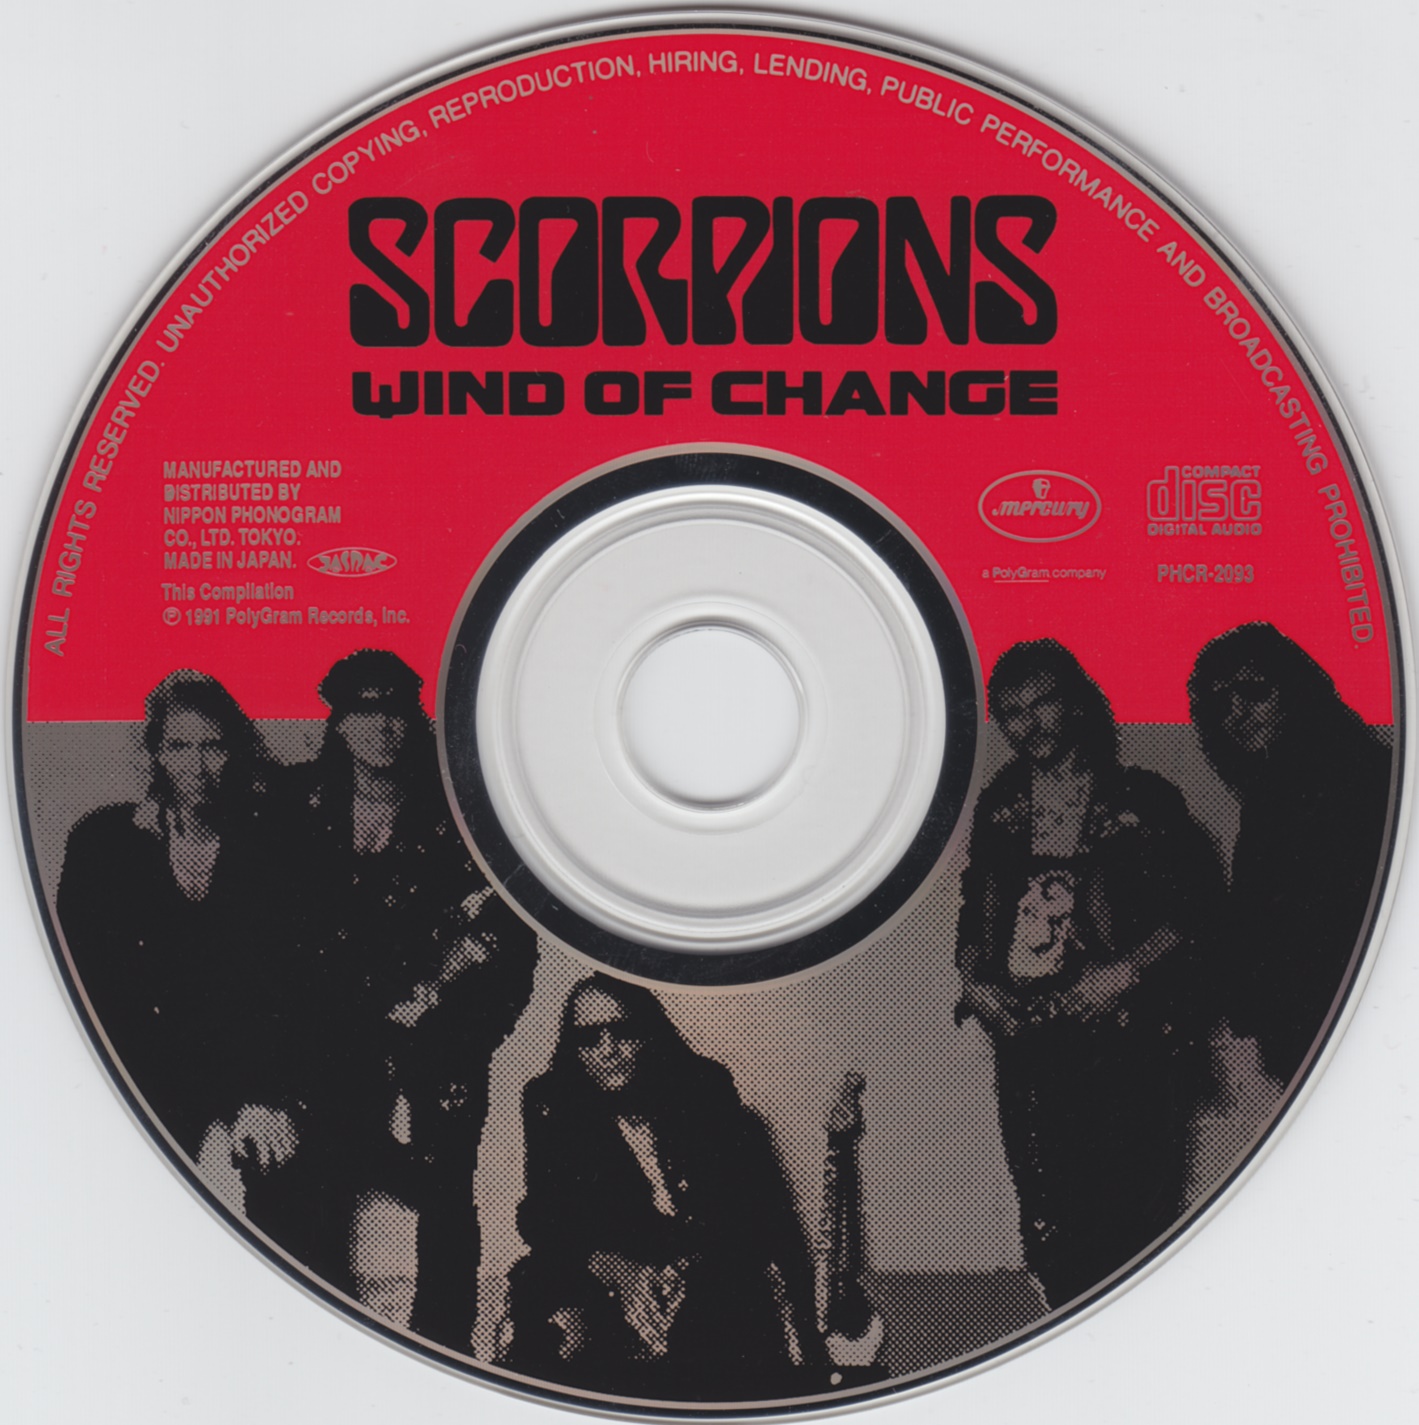 Scorpions. Песня скорпионс ветер перемен